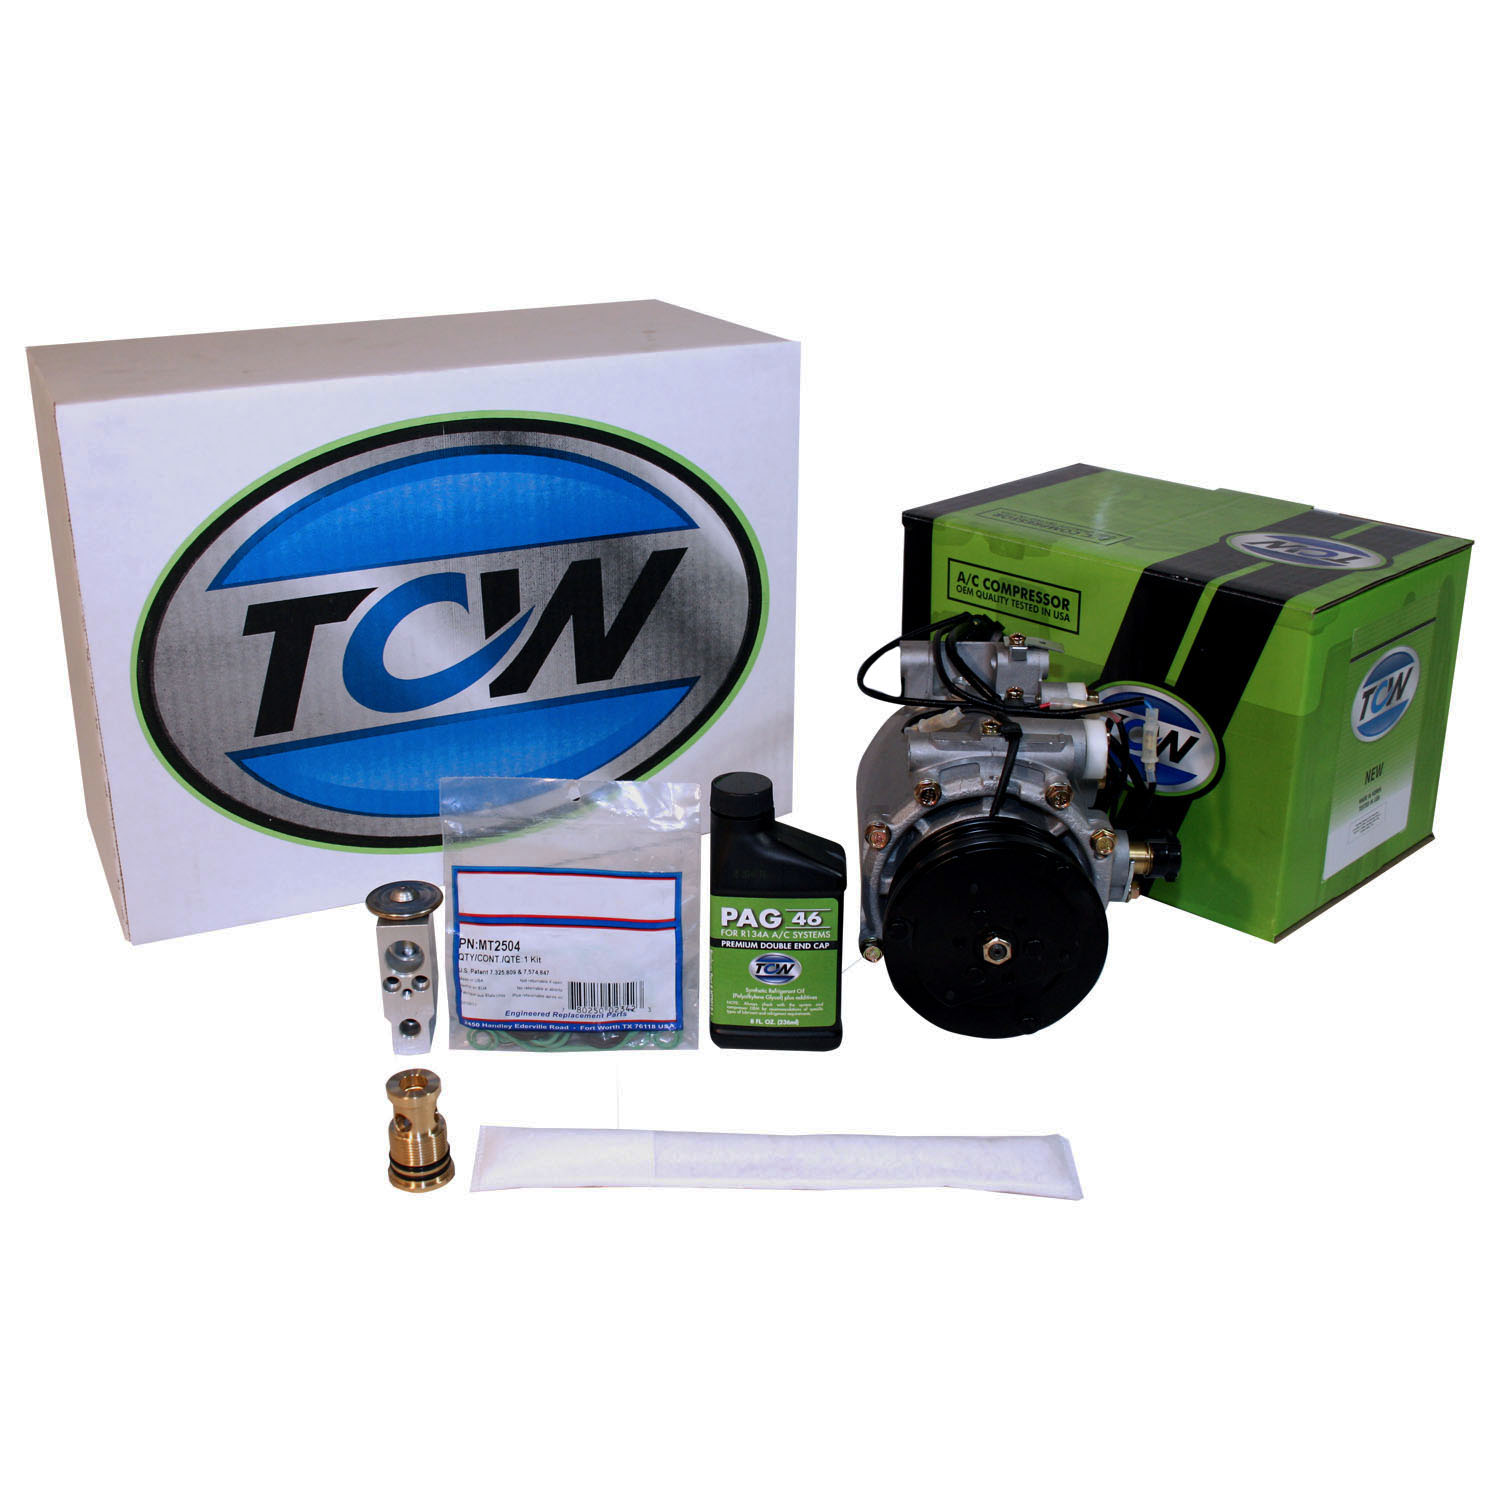 TCW Vehicle A/C Kit K1000219N New Product Image field_60b6a13a6e67c